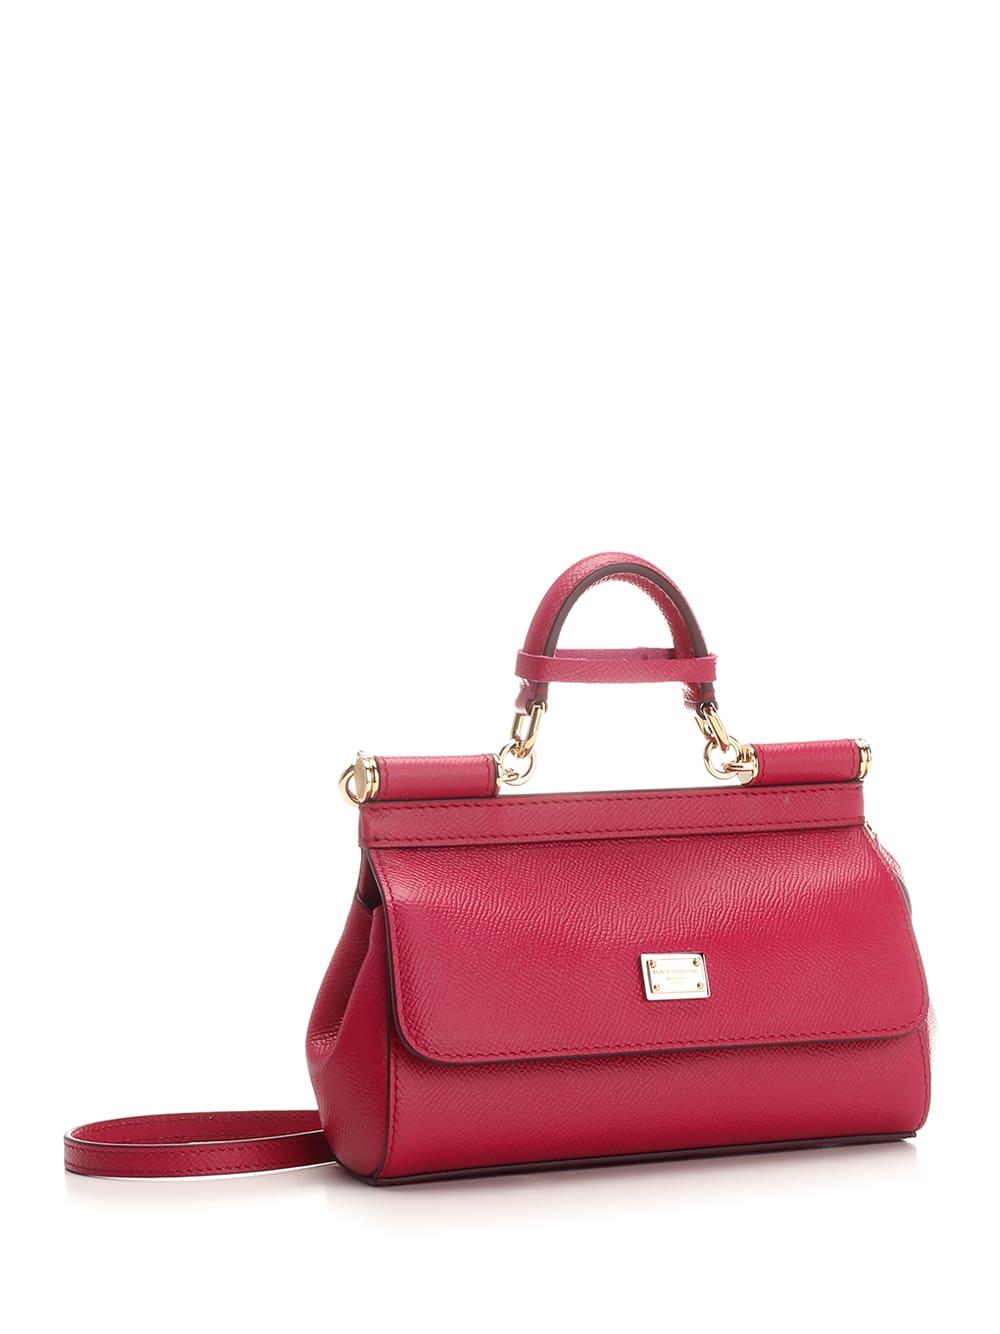 Dolce & Gabbana: Pink Small Sicily Bag